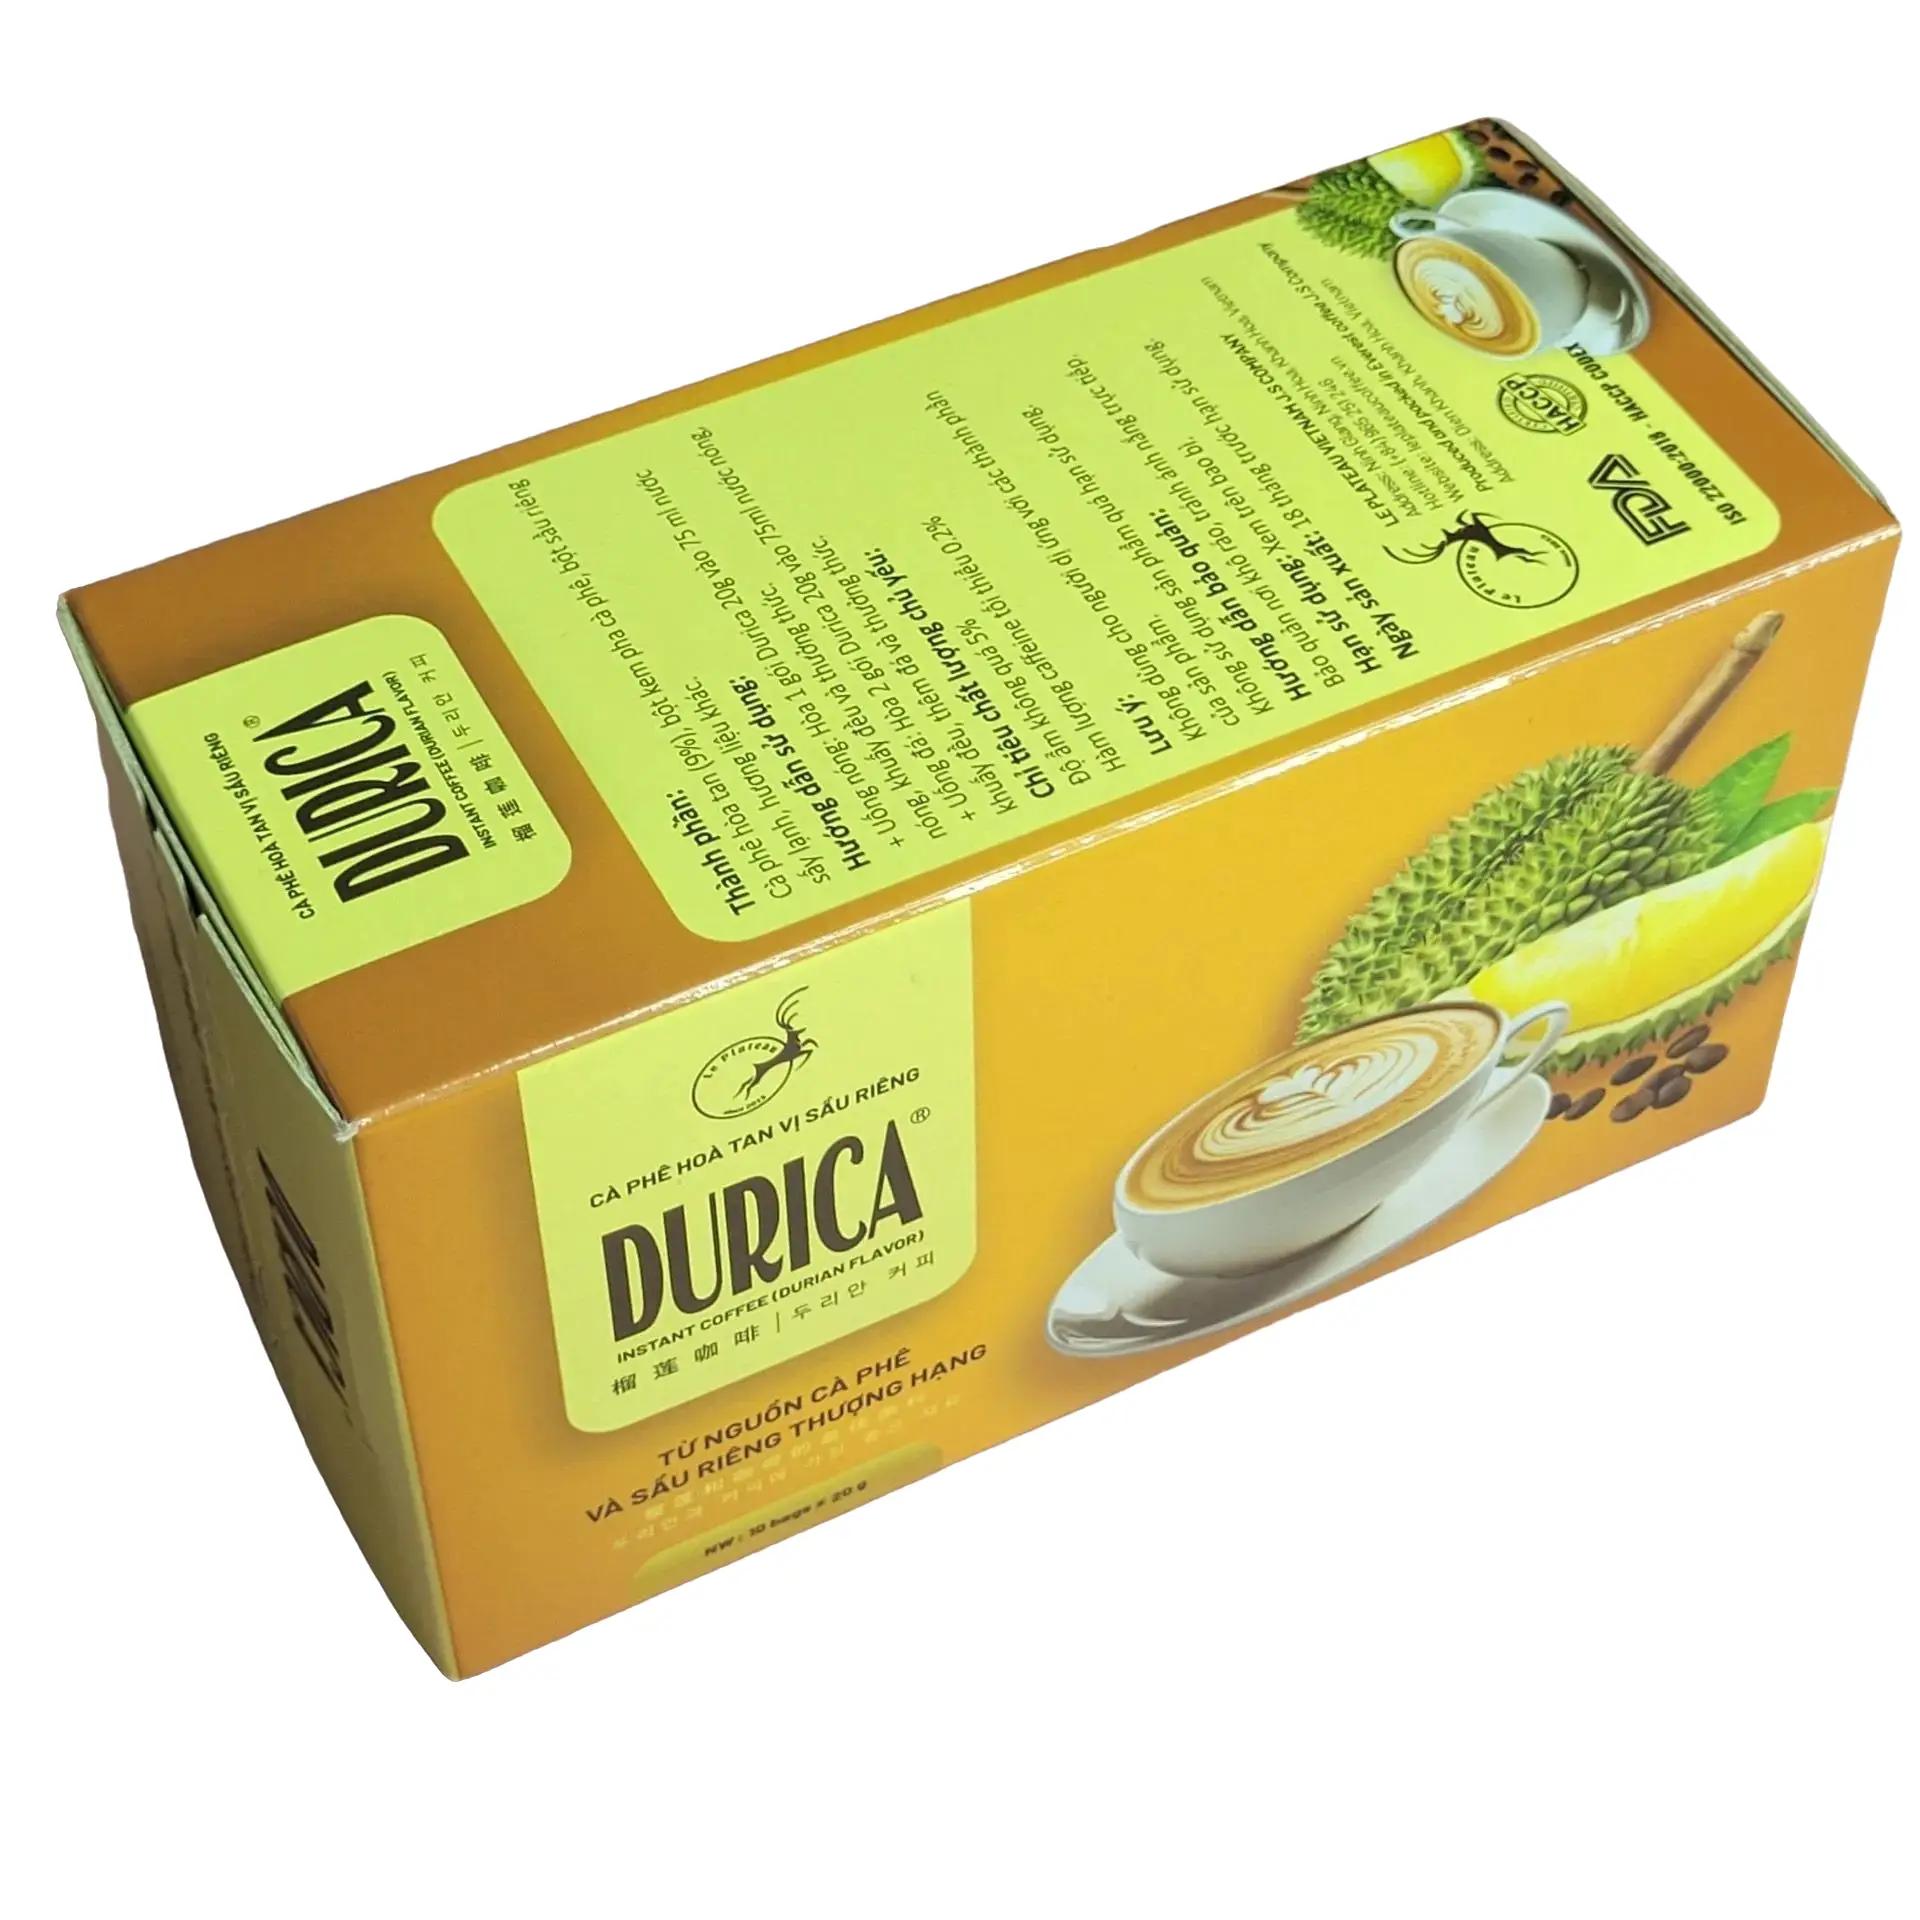 Durica soluble coffee low fat organic low sugar coffee